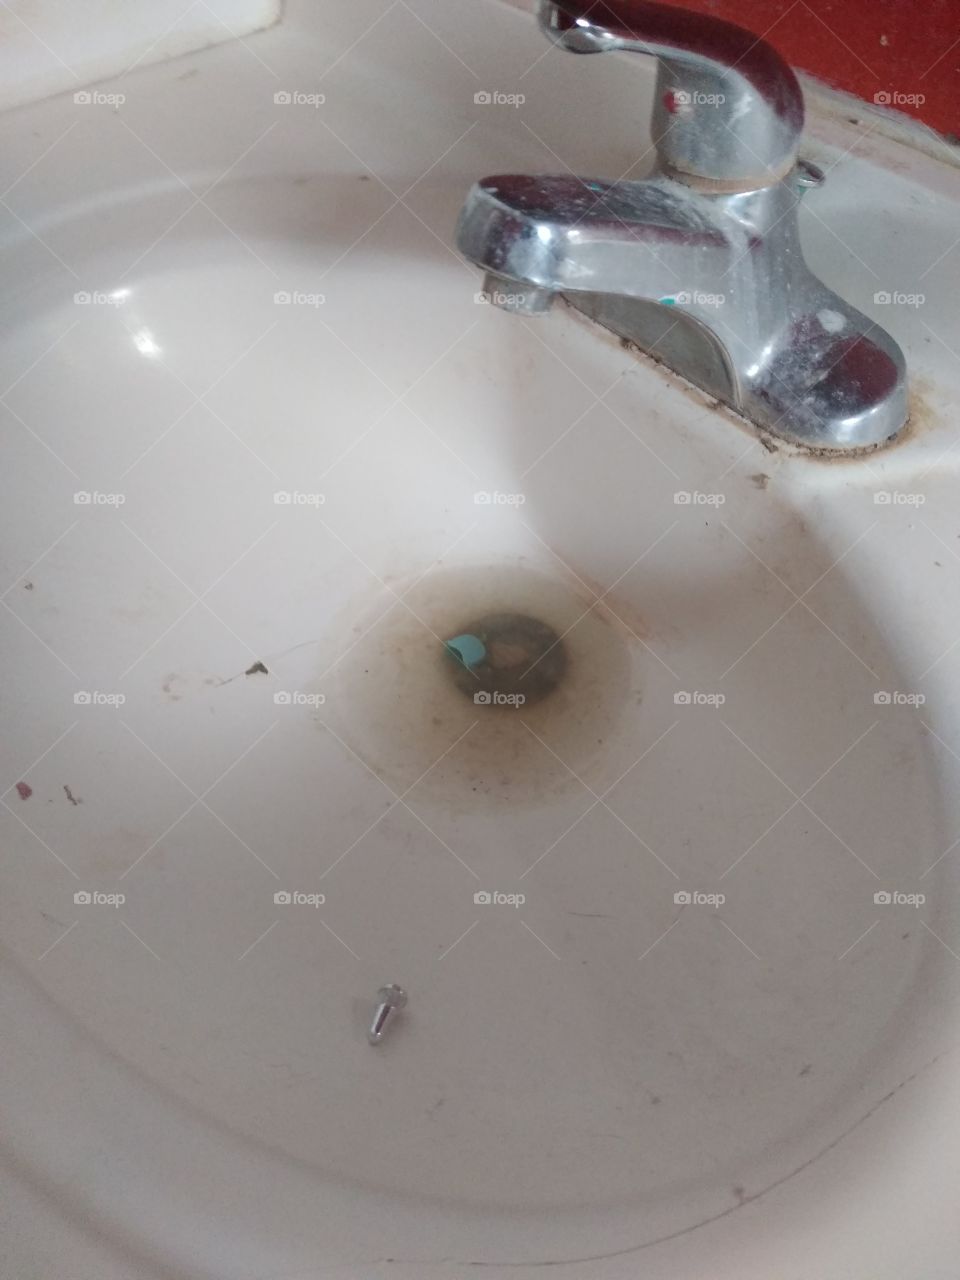 Clogged nasty sink